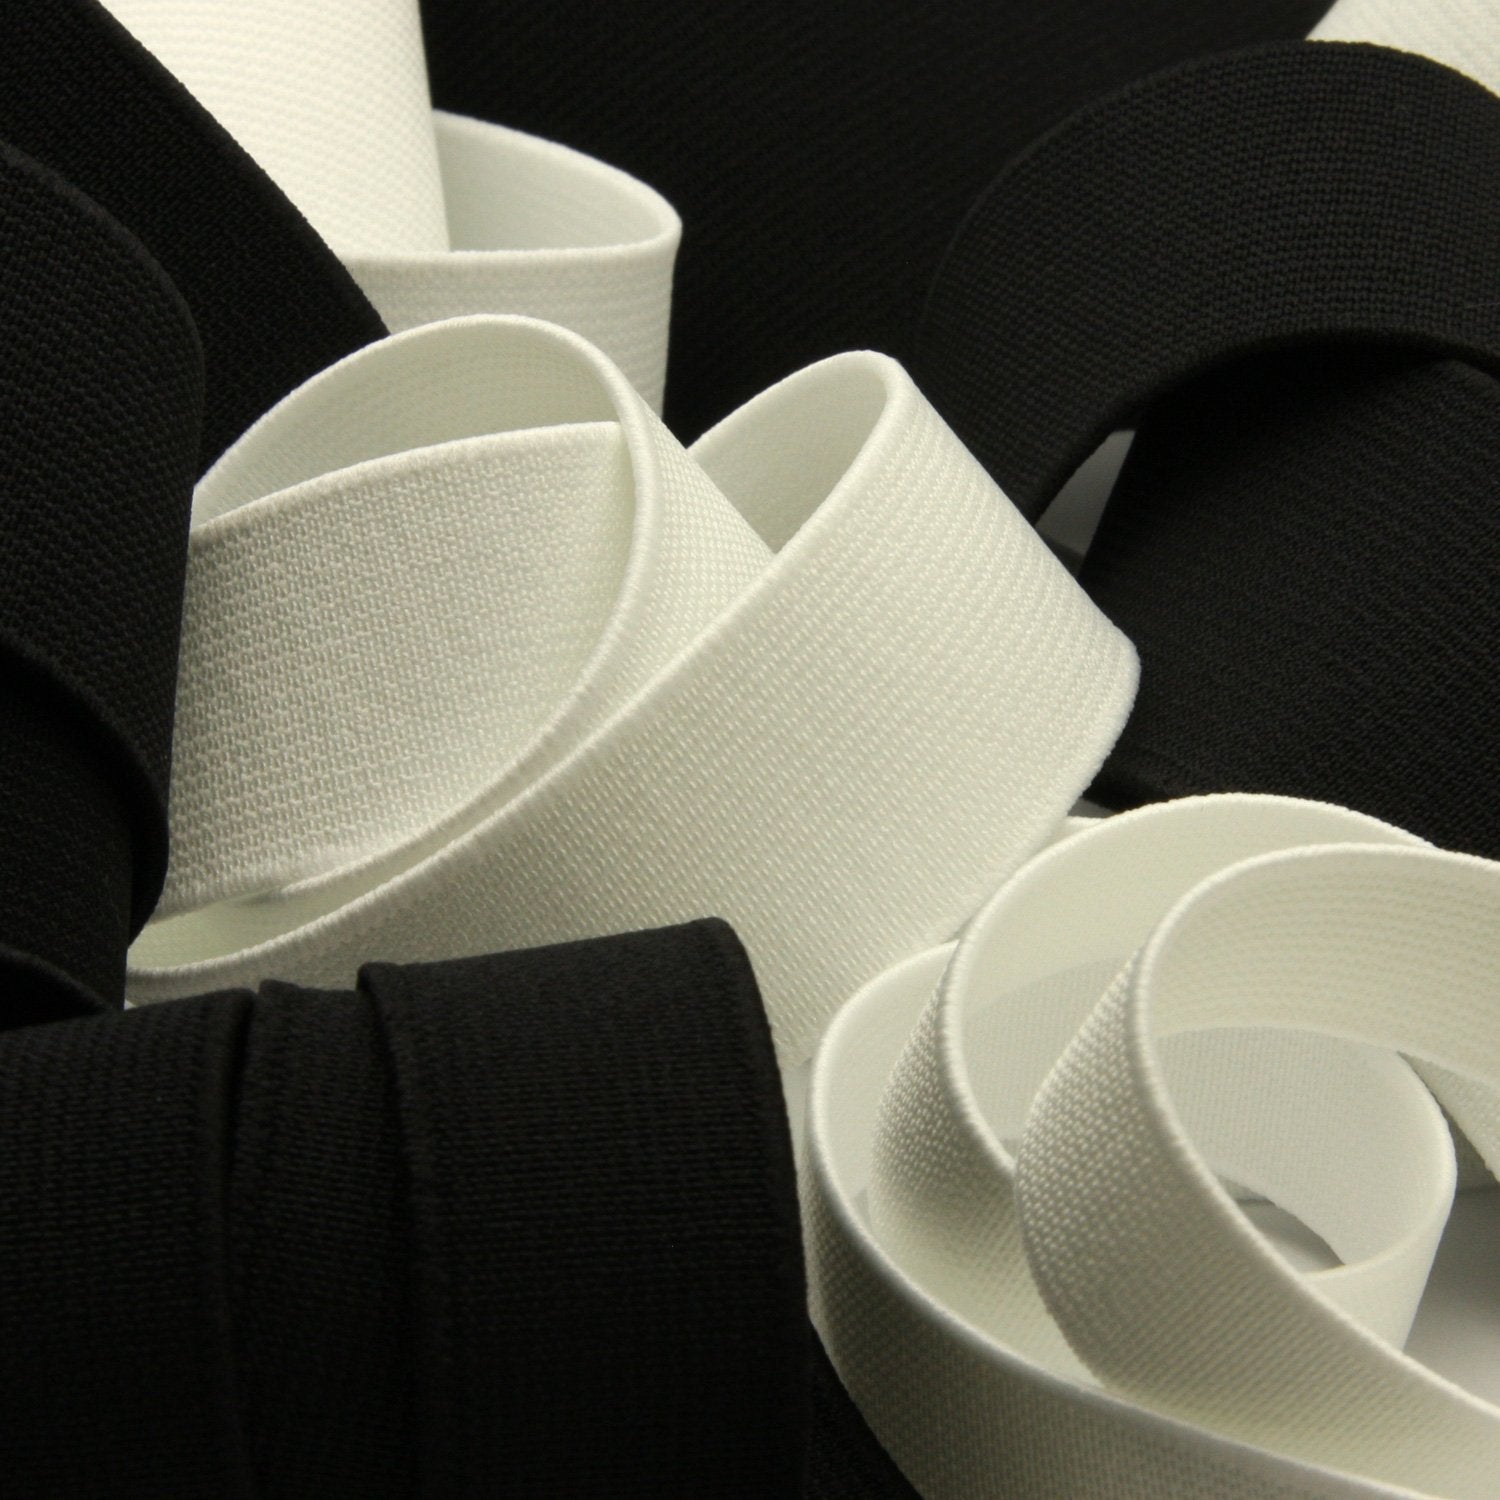 FUJIYAMA RIBBON [Wholesale] Soft Type Inside Belt 60mm 30 Meters Roll Off White